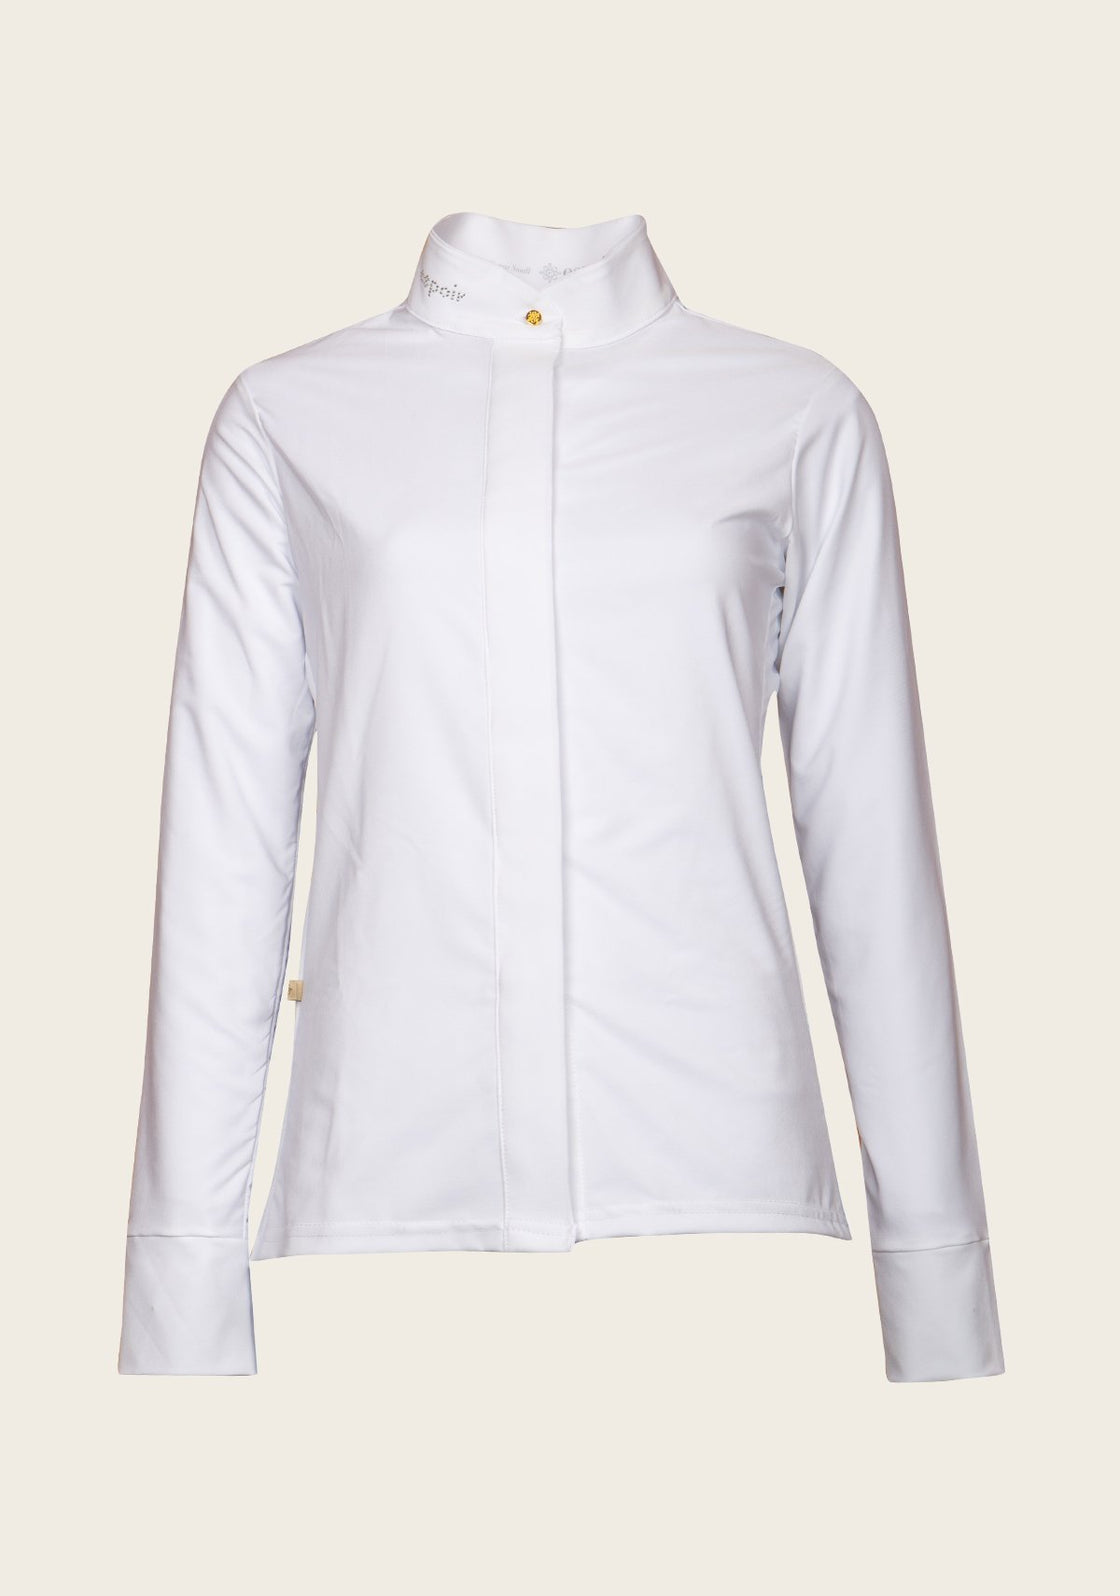 Espoir Lumiere Button White Grand Prix Show Shirt